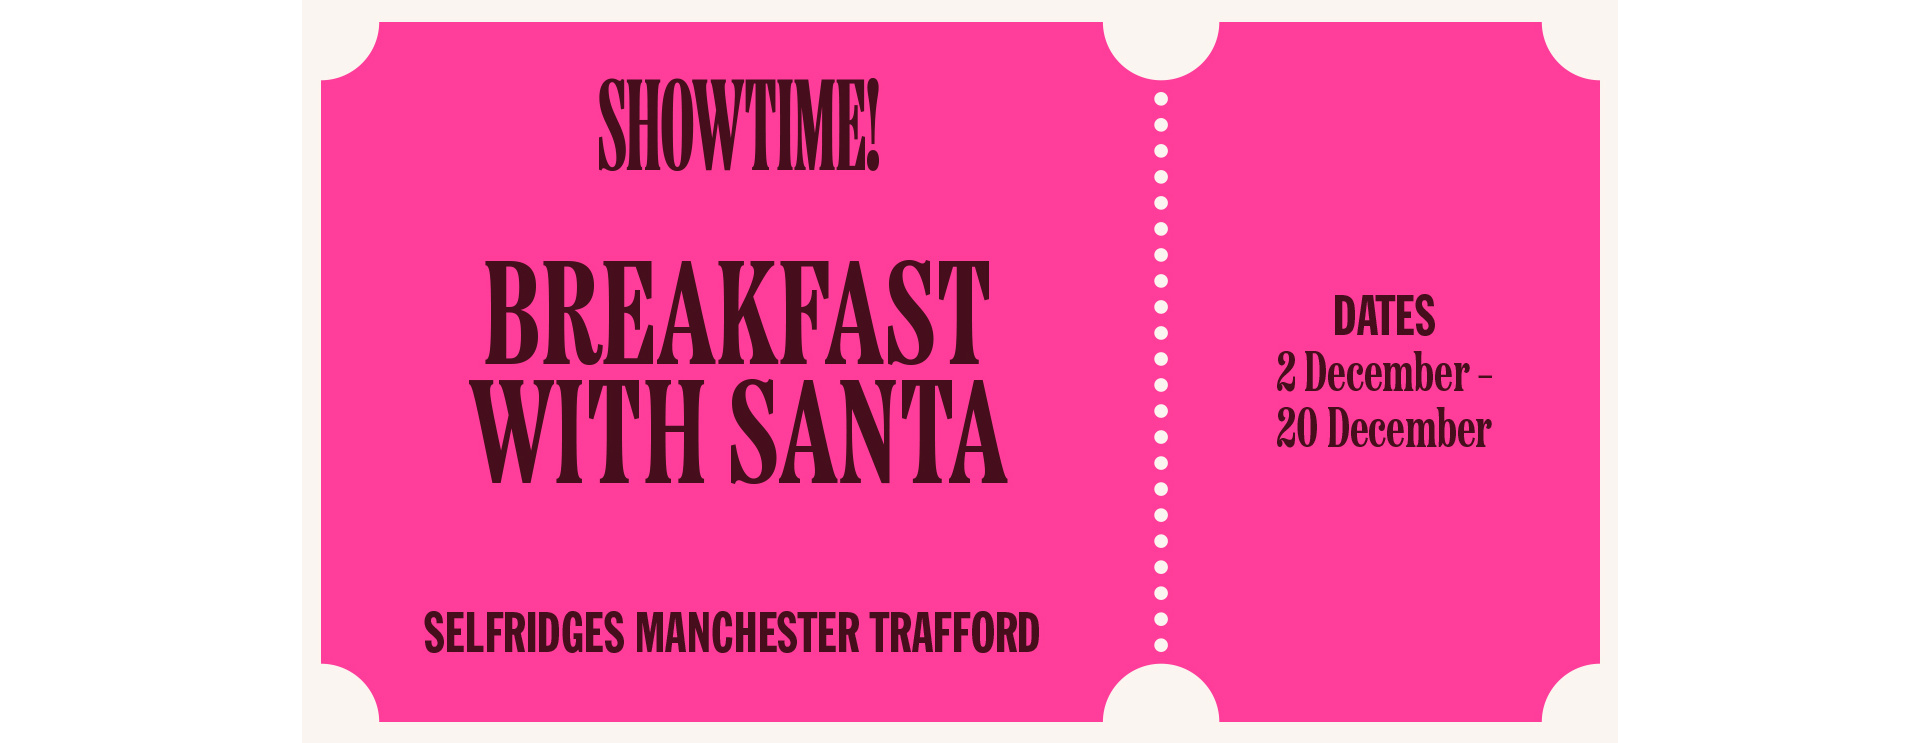 Breakfast with Santa at Selfridges Manchester Trafford